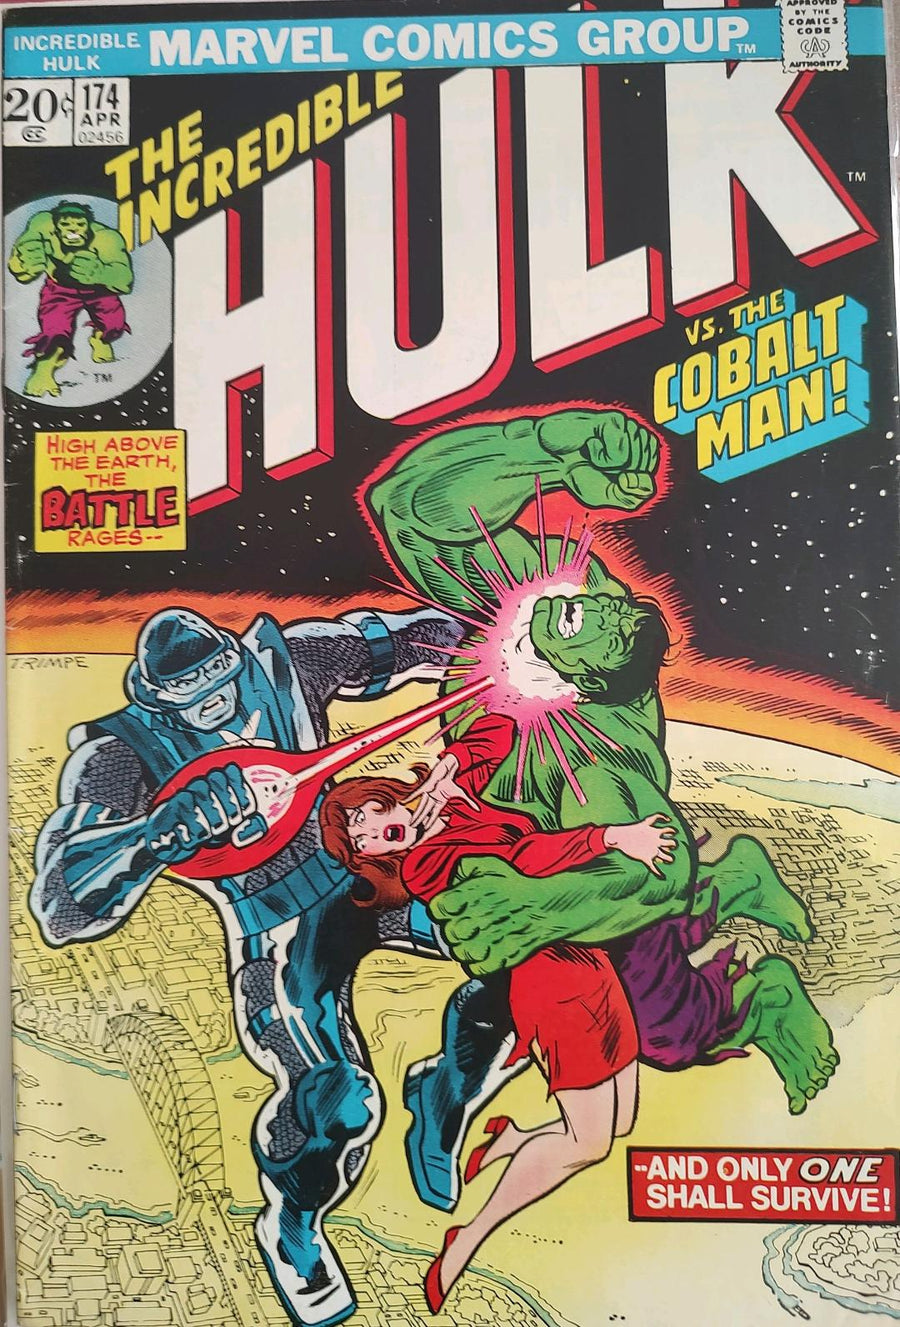 The Incredible Hulk #174 Comic Book Cover